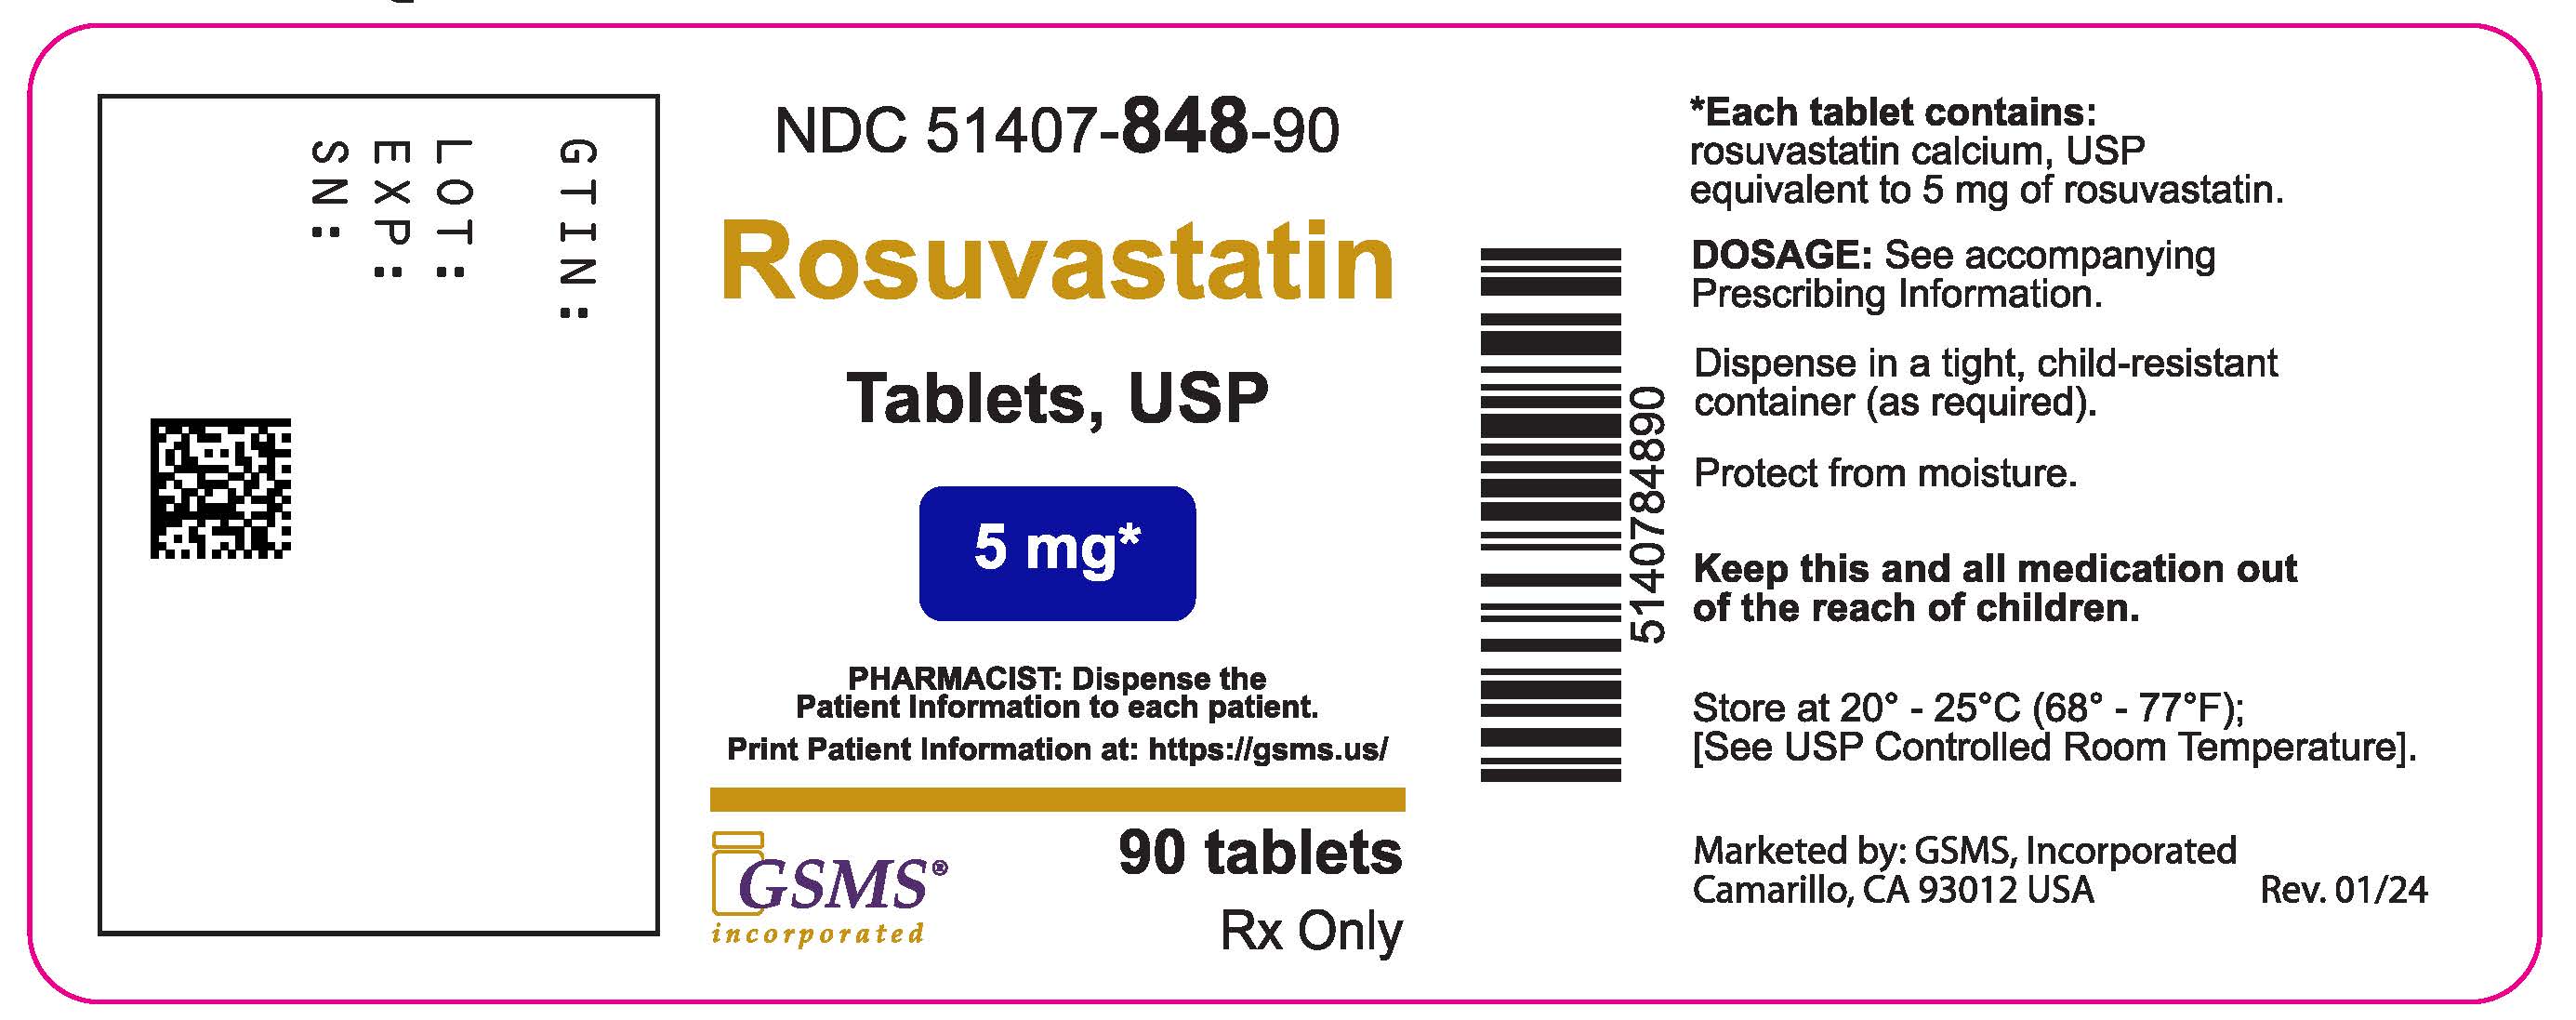 51407-848-90LB - Rosuvastatin - Rev. 0124.jpg